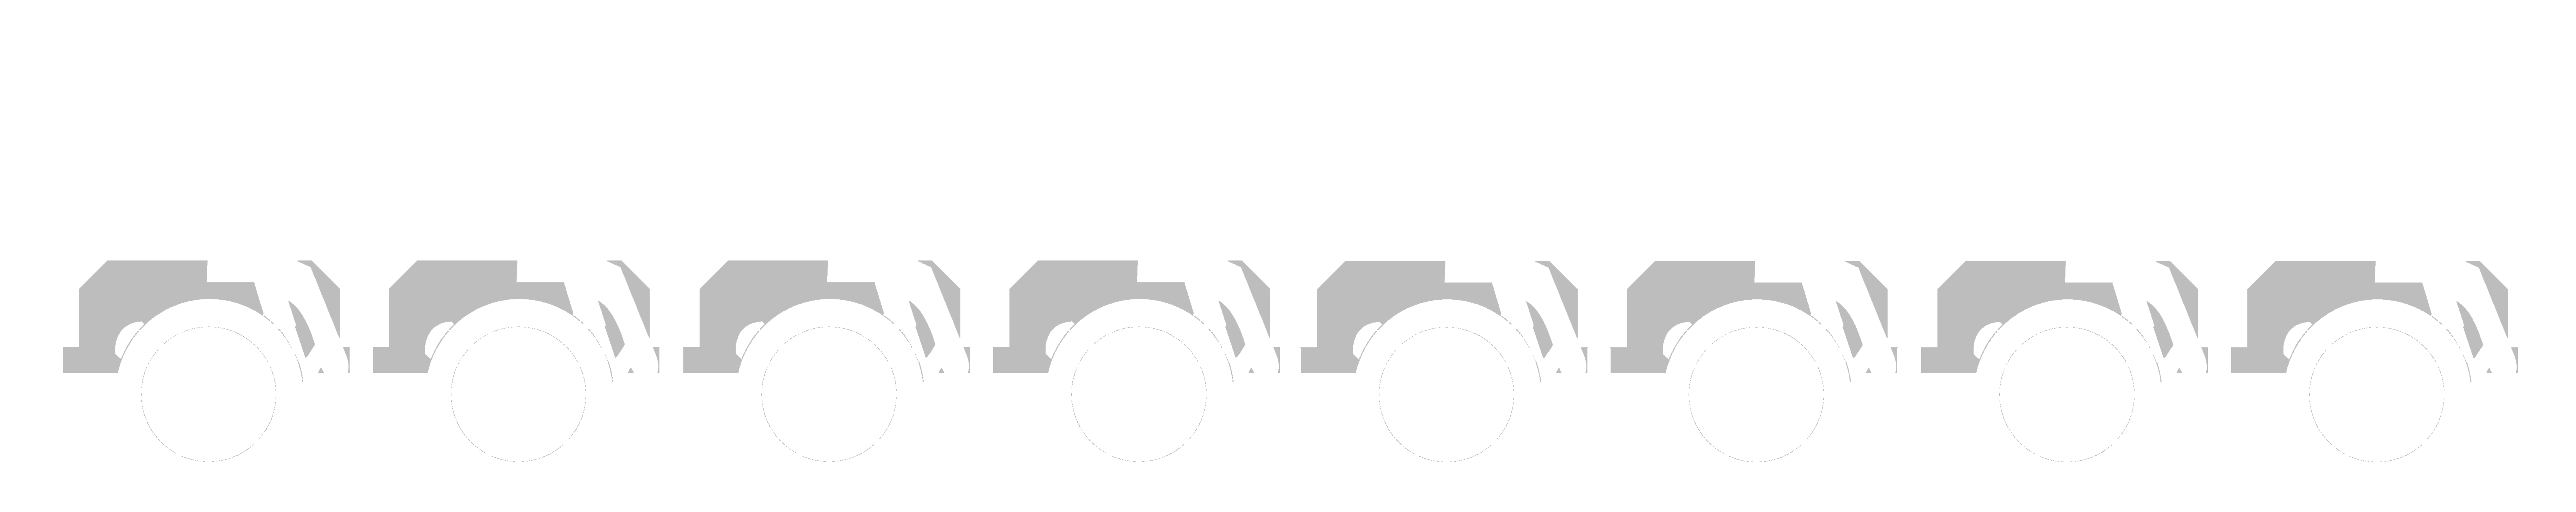 Heavy Haul Cargo | HeavyHaulCargo.com